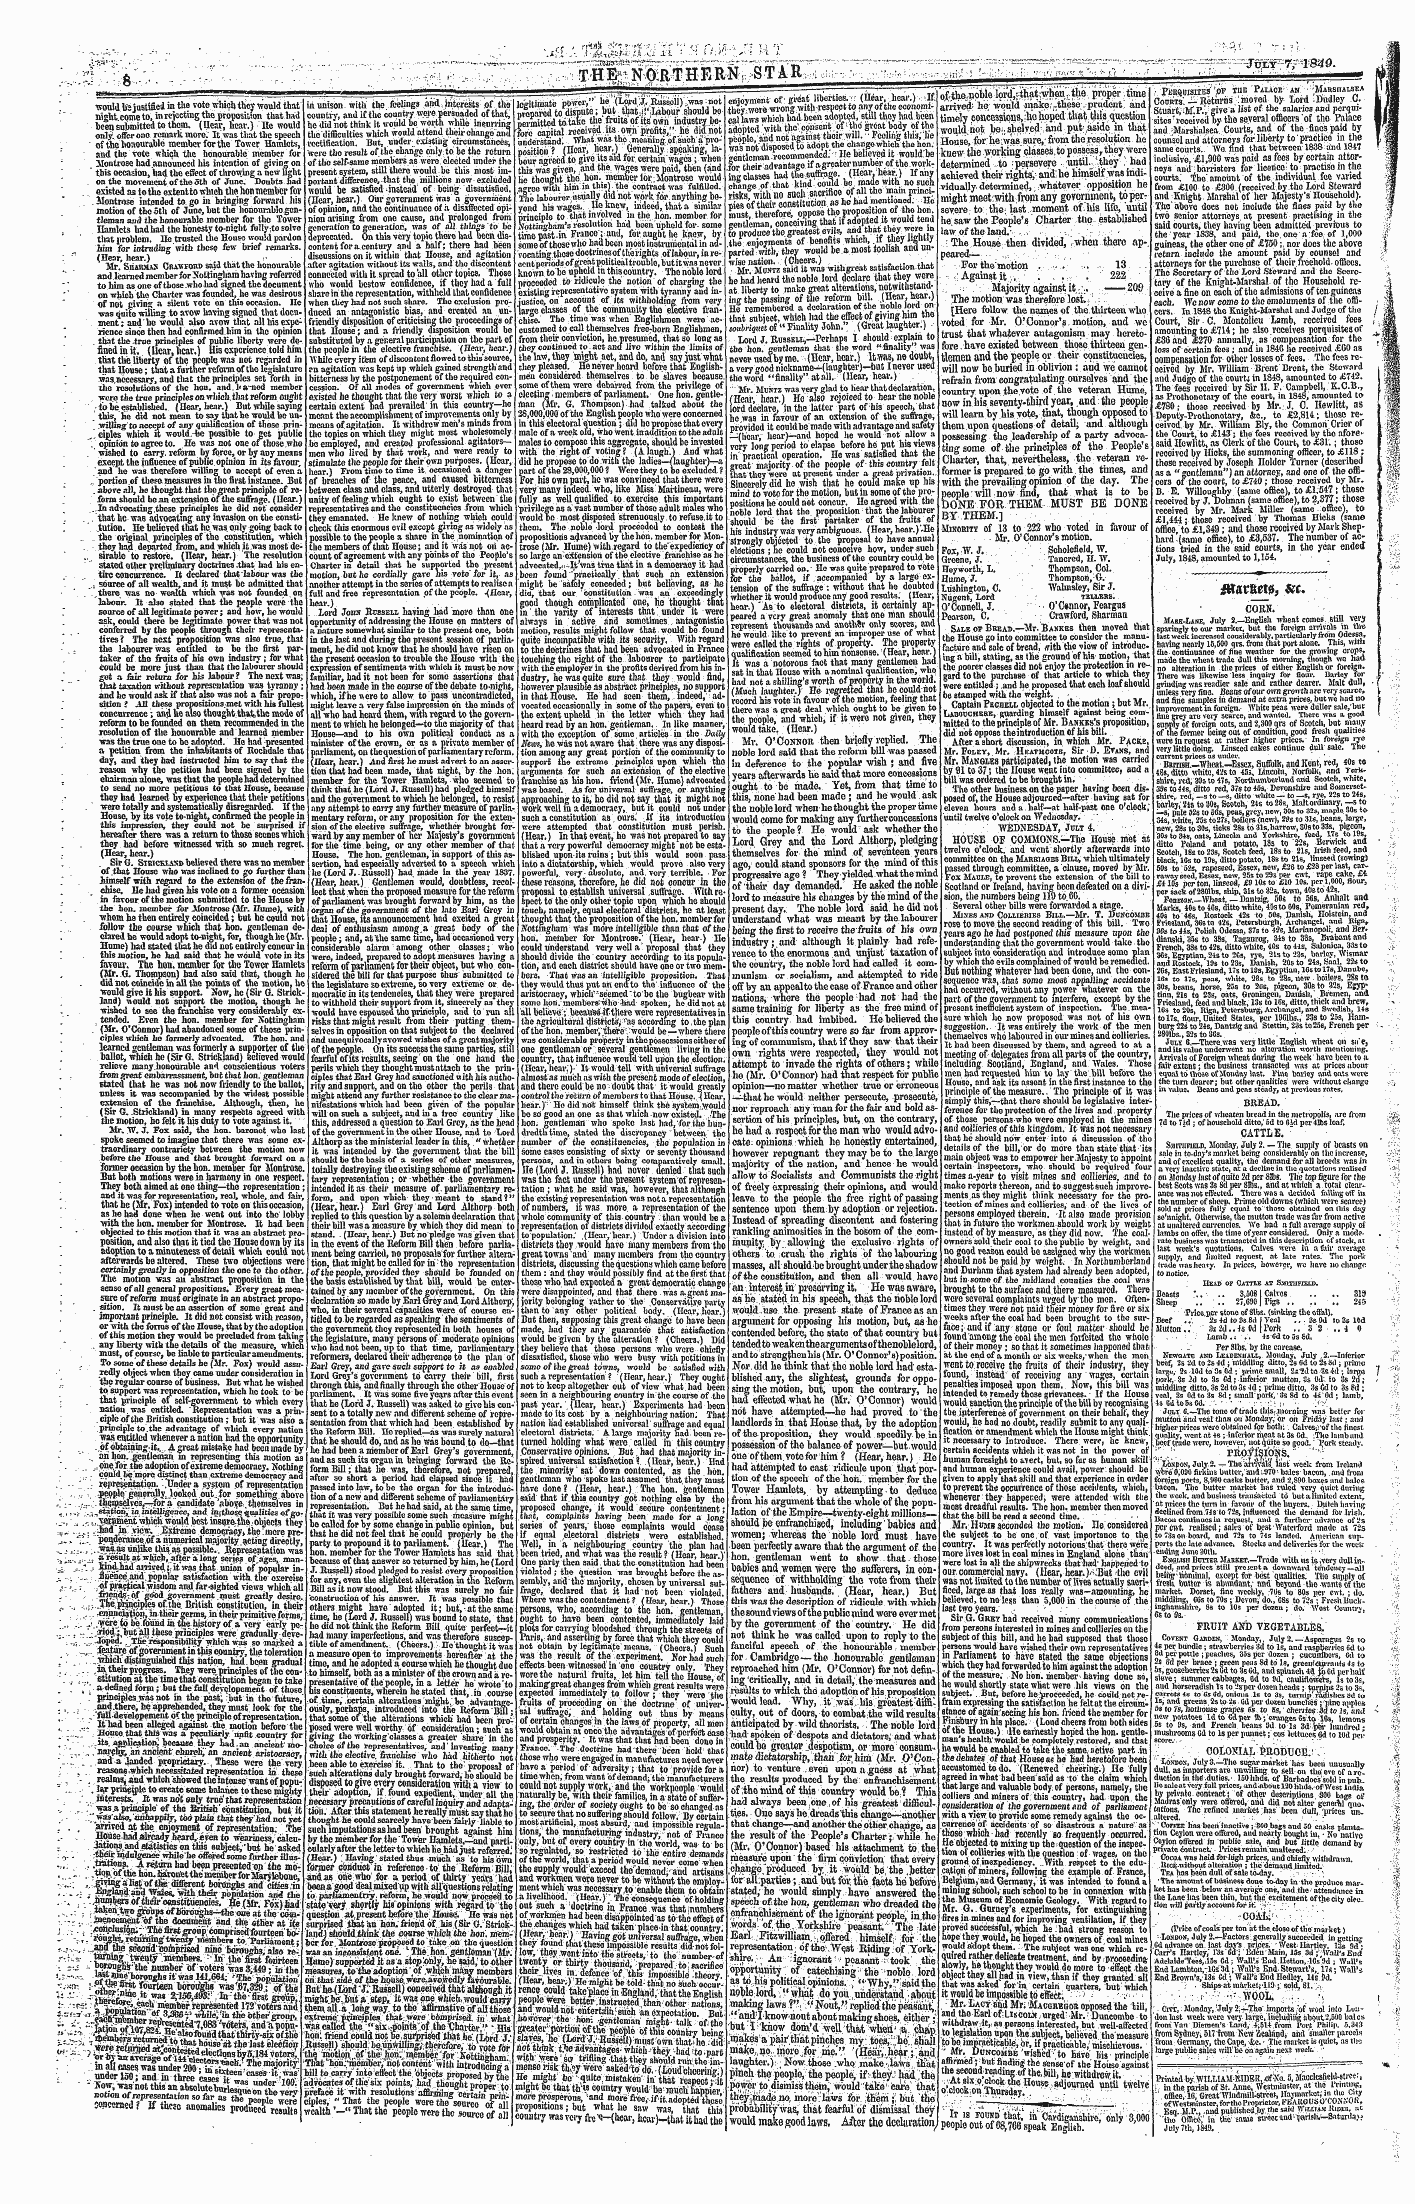 Northern Star (1837-1852): jS F Y, 3rd edition: 8